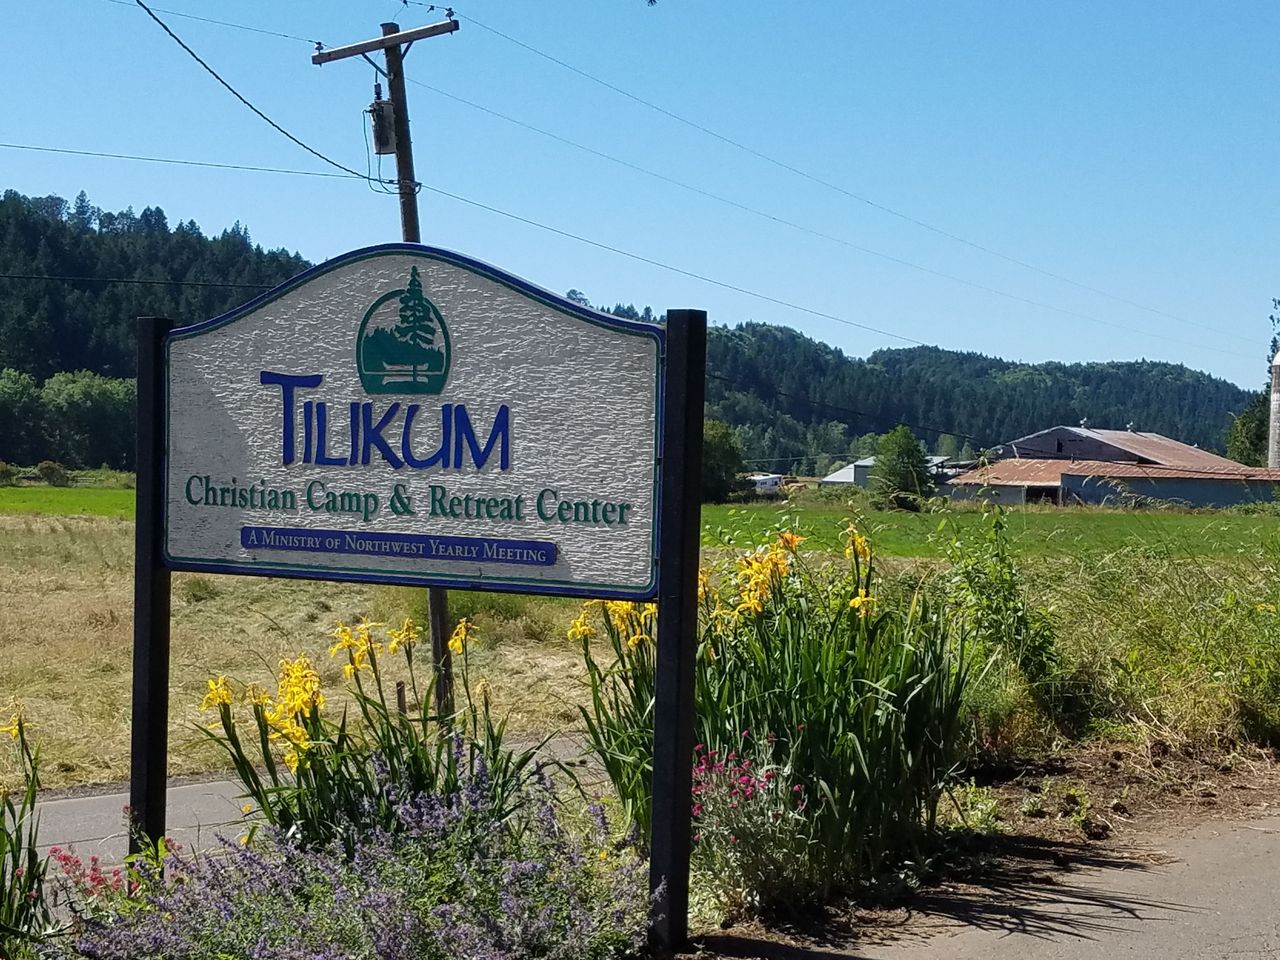 The Til-i-cum Christian Camp